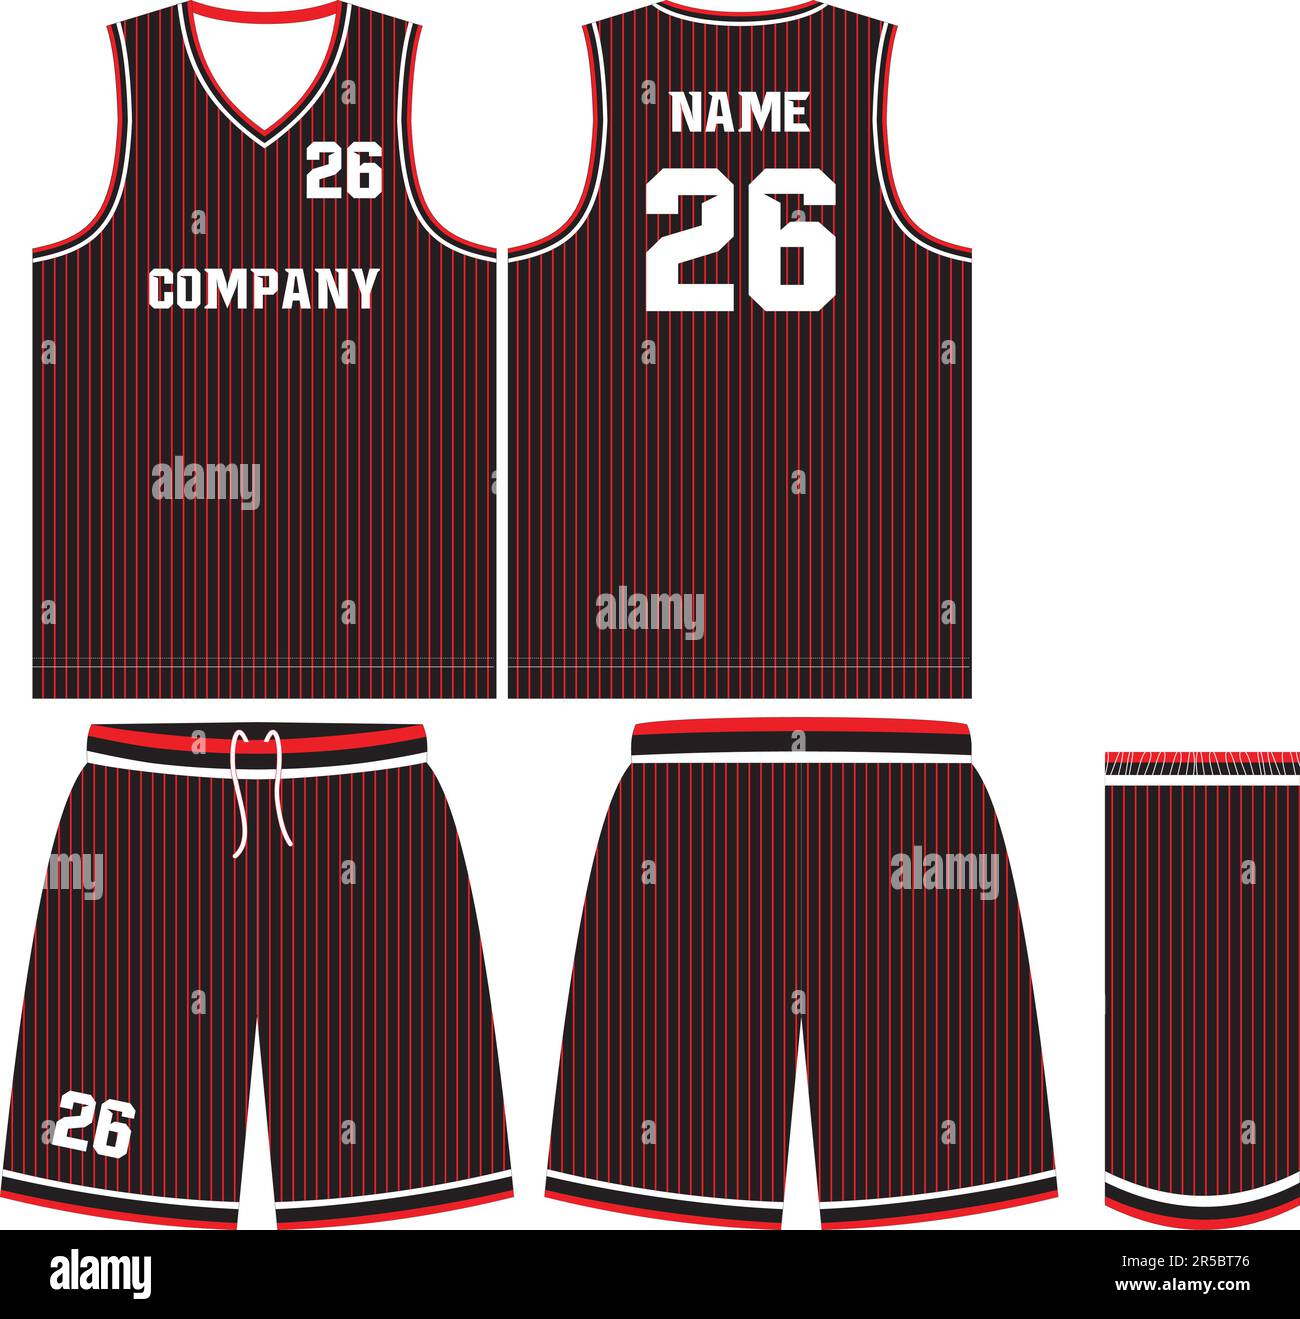 Basketball Uniform Shorts Template for Basketball Club Stock Vector ...